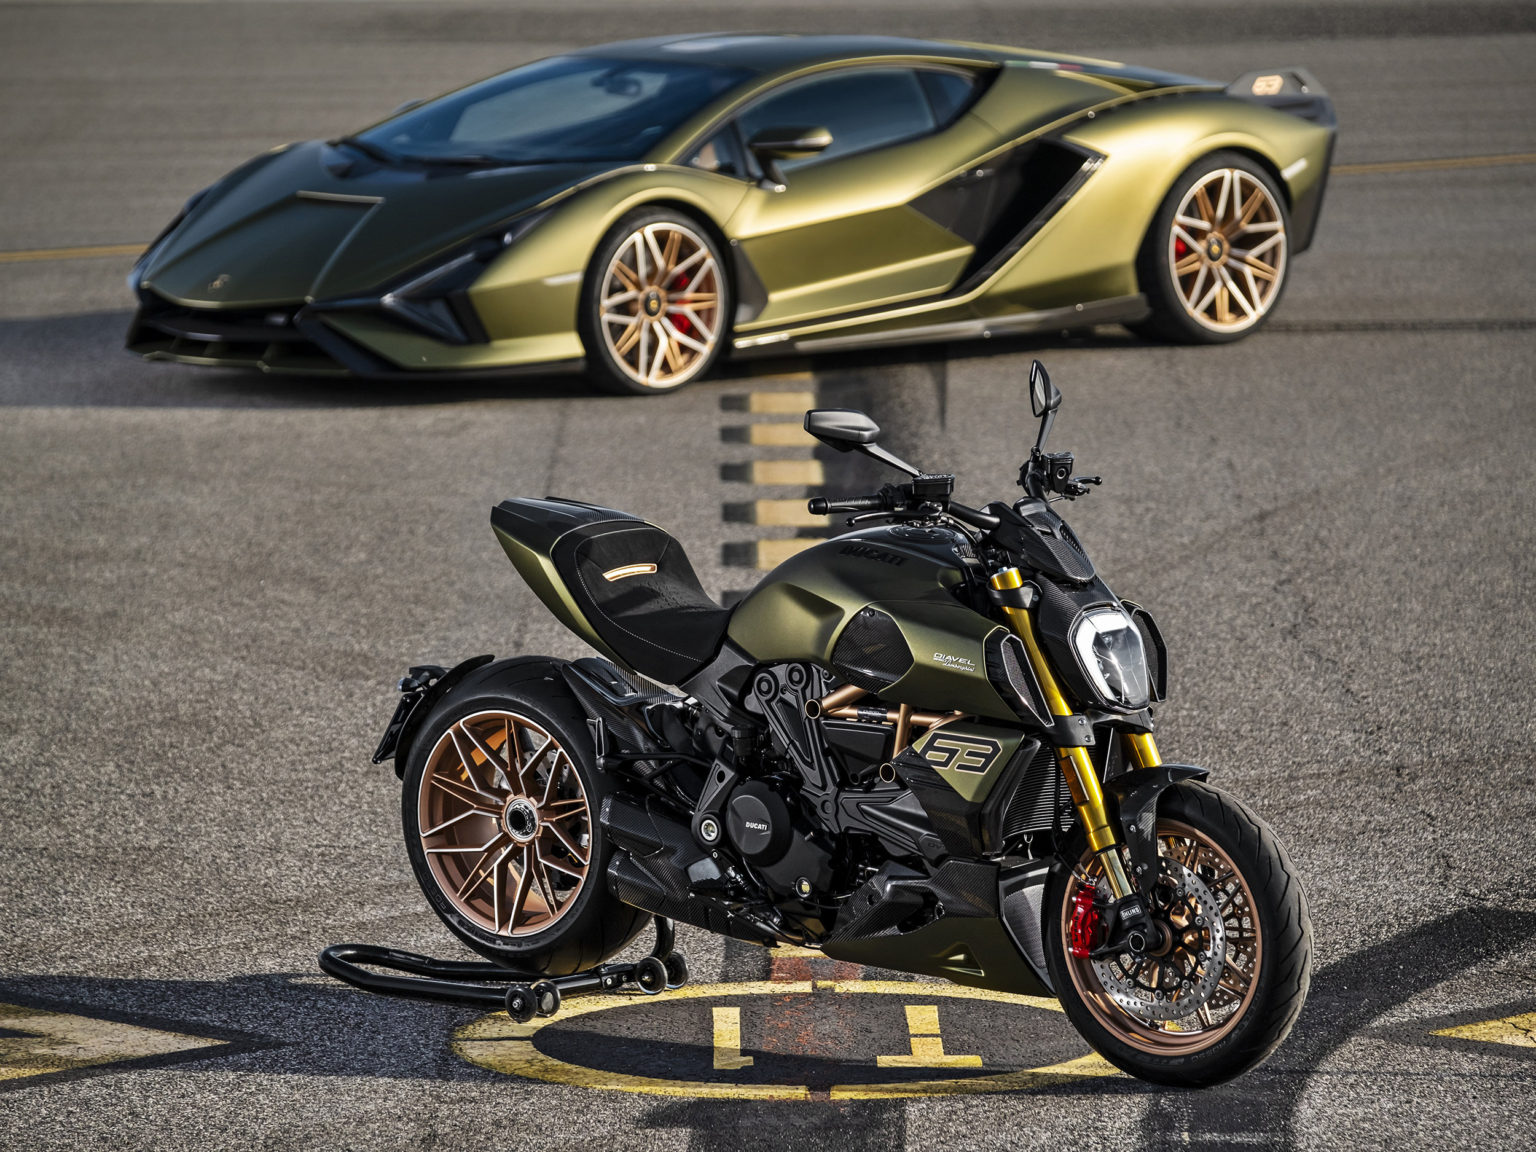 The Ducati Diavel 1260 Lamborghini is inspired by a pioneering Lamborghini car.